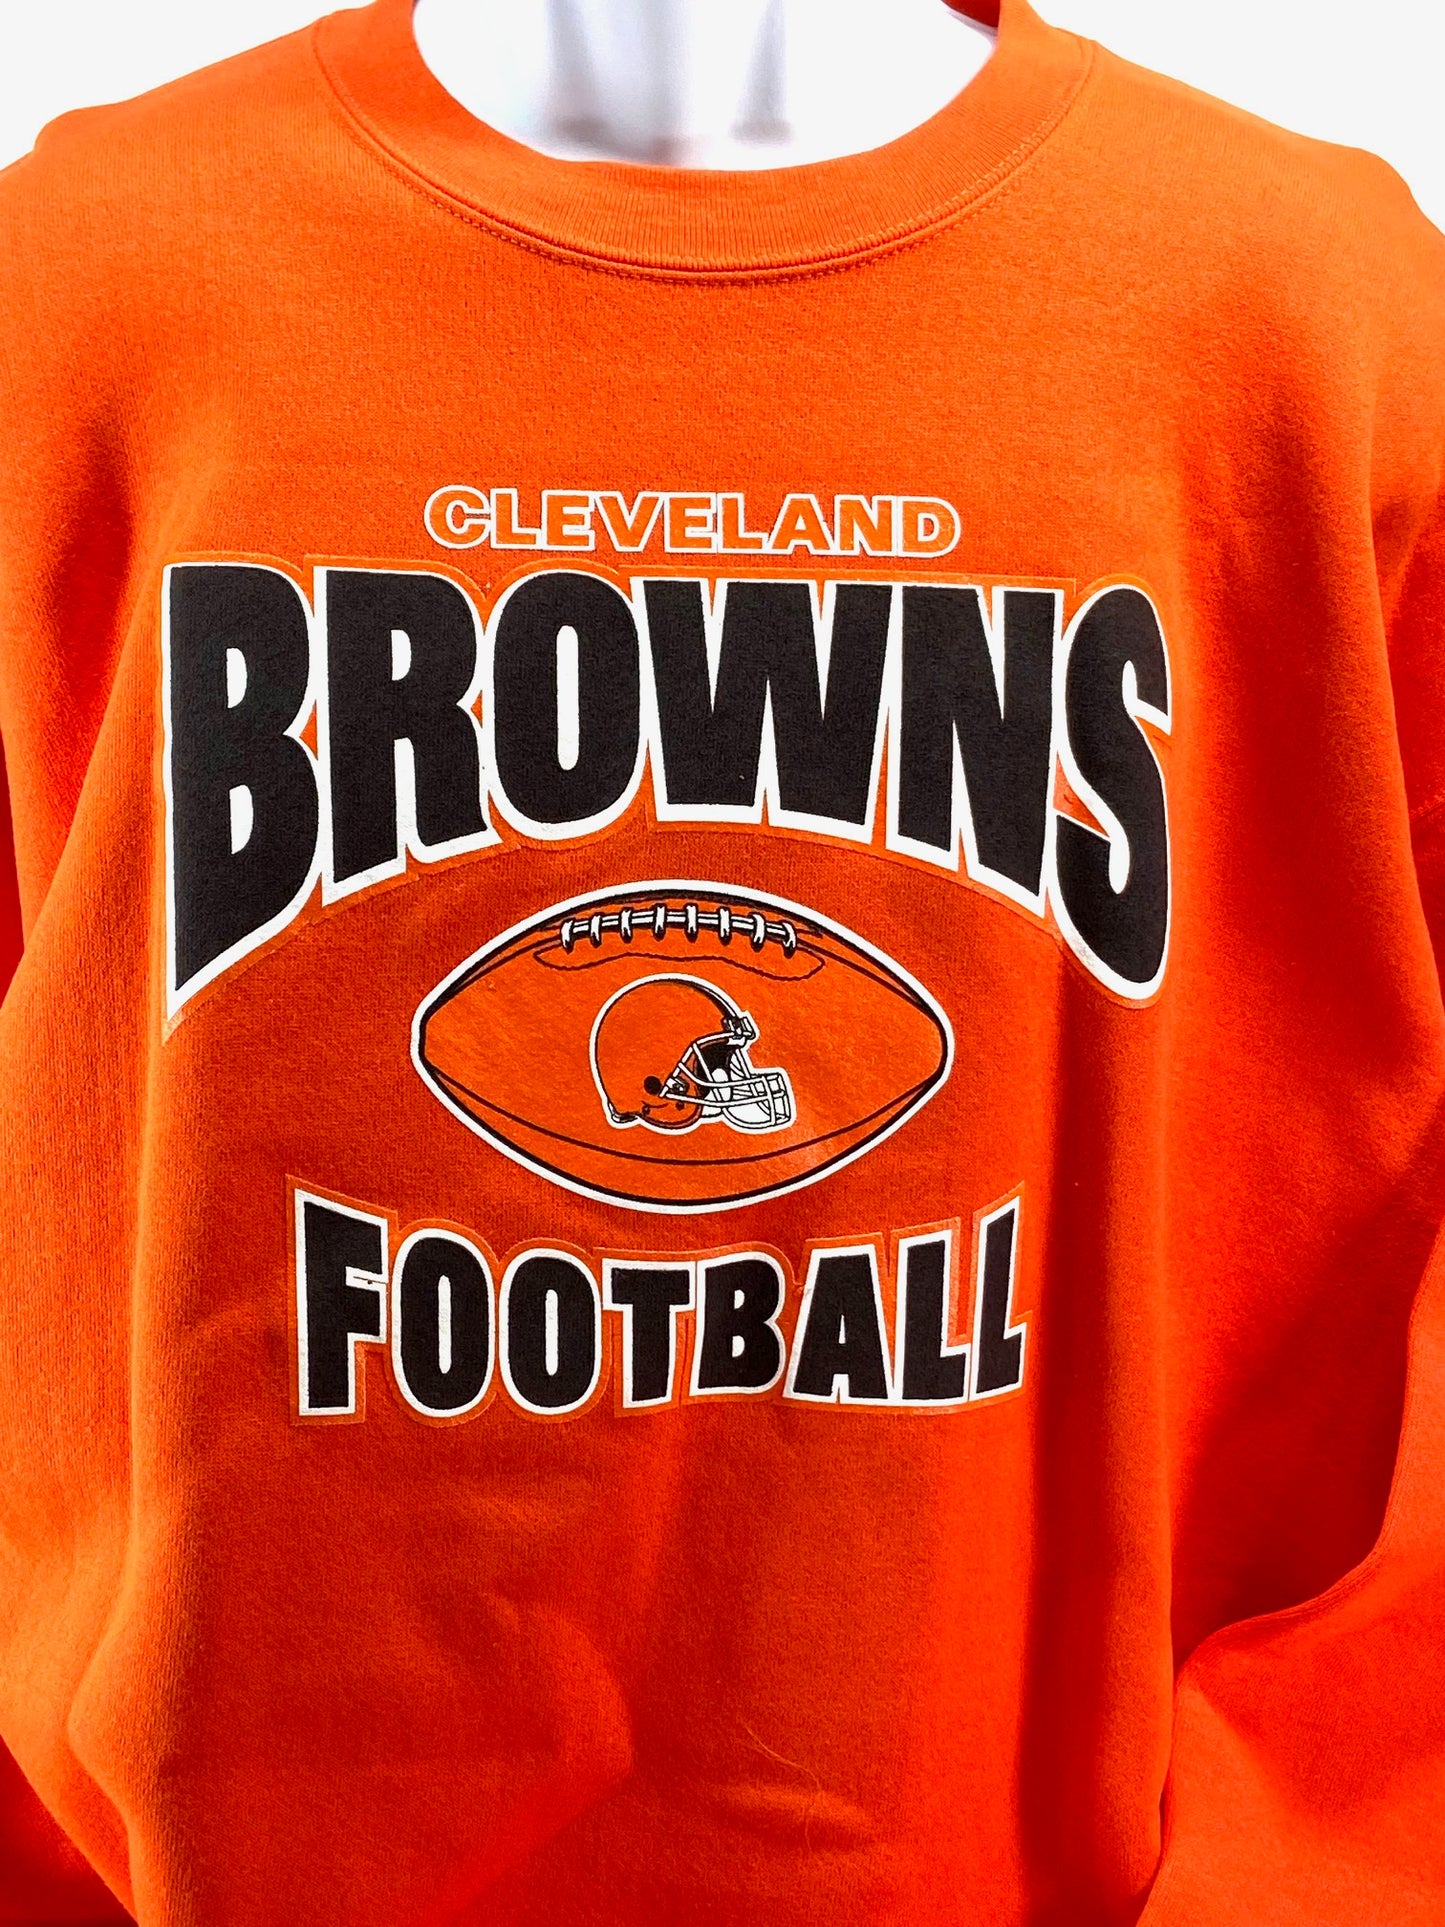 Cleveland Browns NFL 1999 Vintage Orange Hooded Sweatshirt Size XL by NFL/VF Imagewear